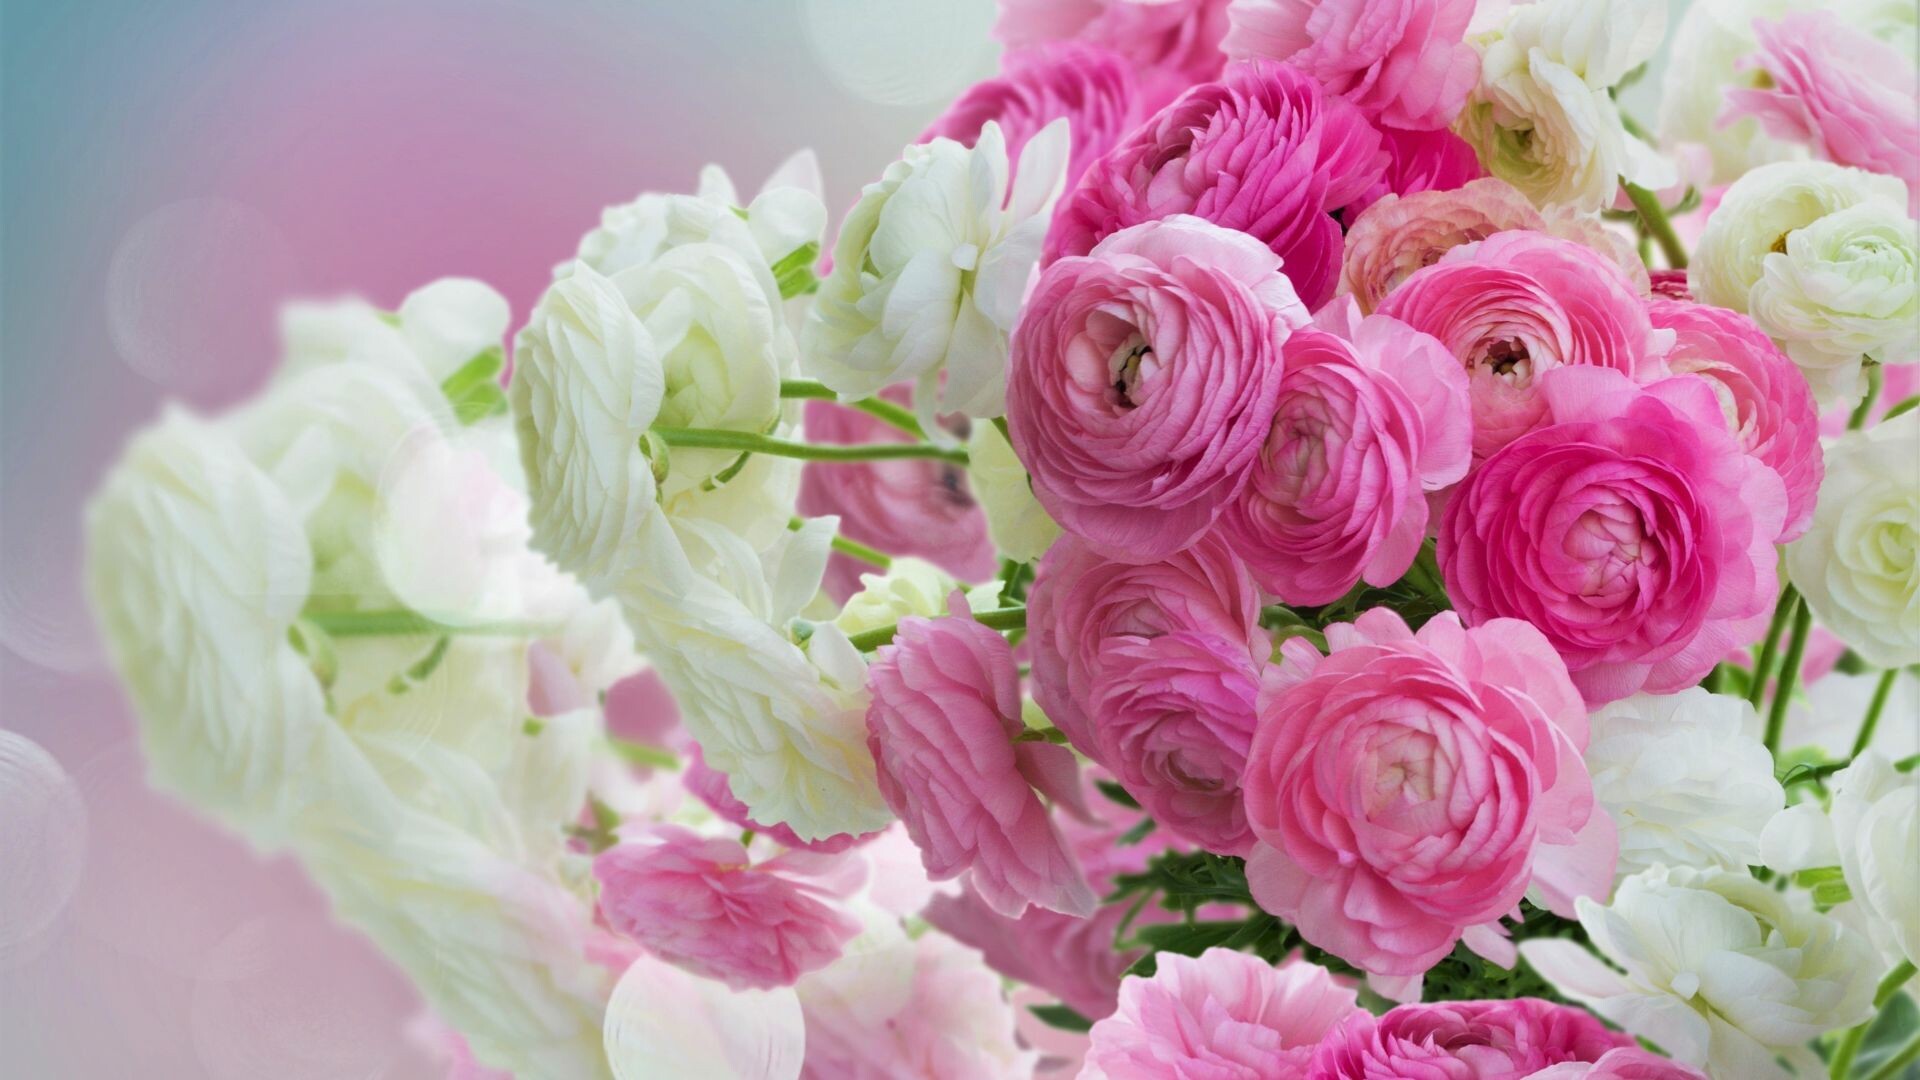 Flower Bouquet: Floral design, Floristry, Bunch of flowers. 1920x1080 Full HD Wallpaper.